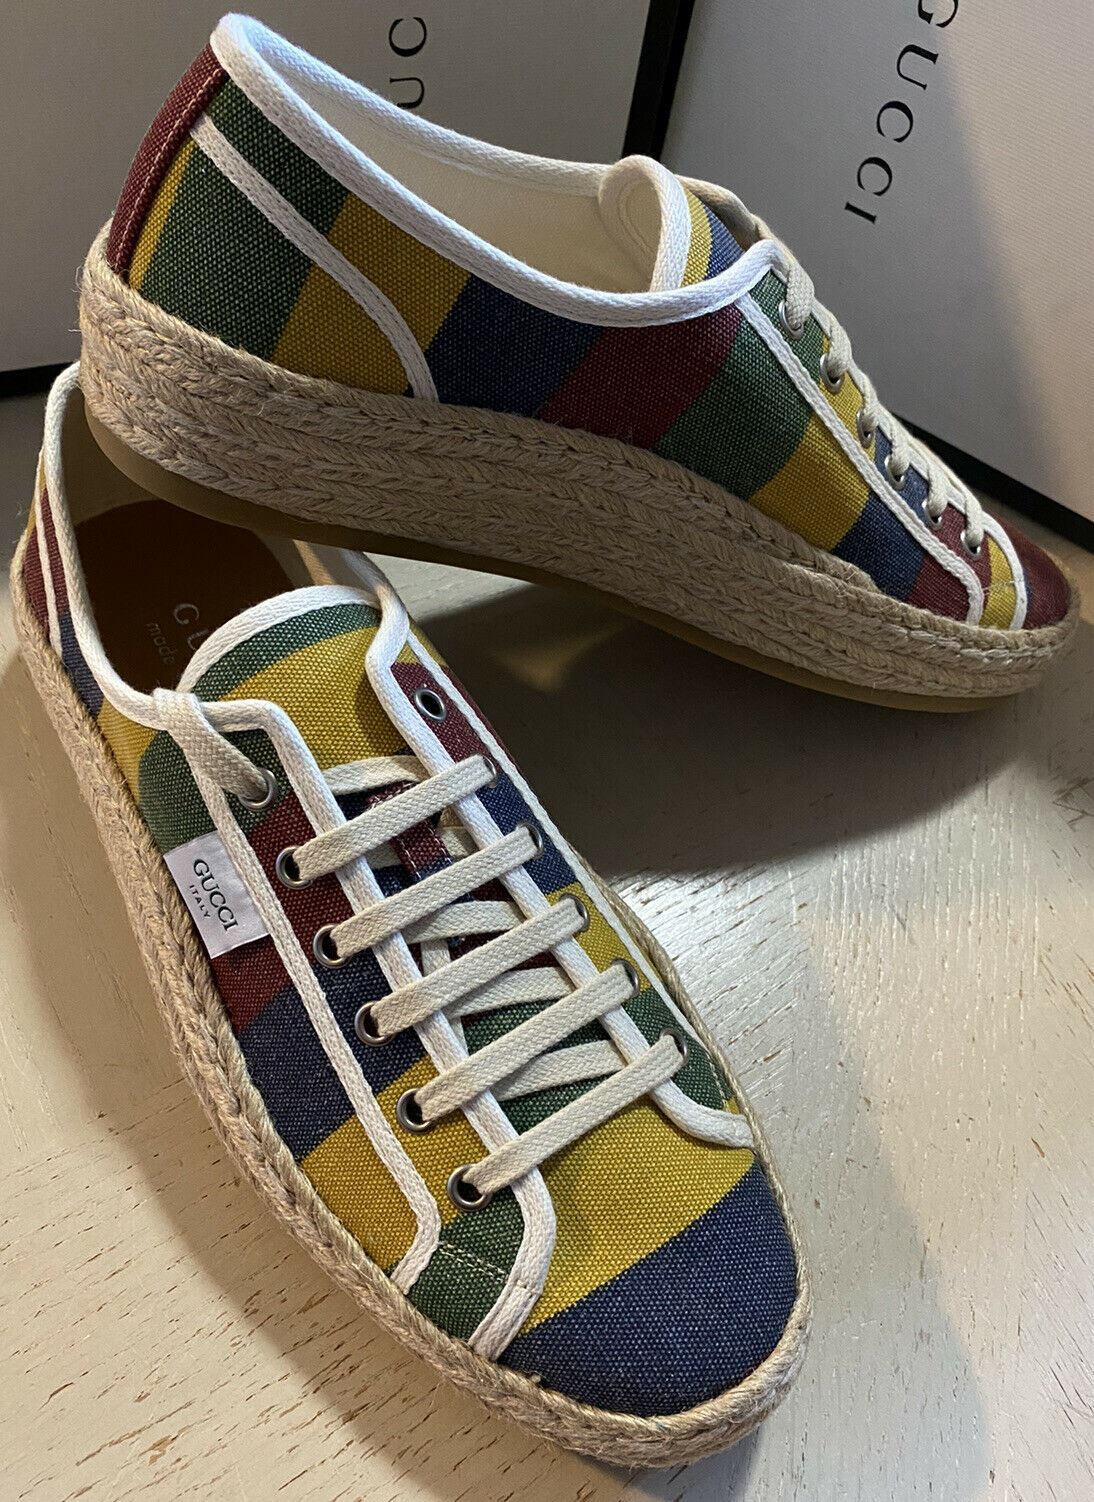 Neue Gucci Herren Canvas Espadrille Schuhe Mehrfarbig 9 US/8 UK Italien